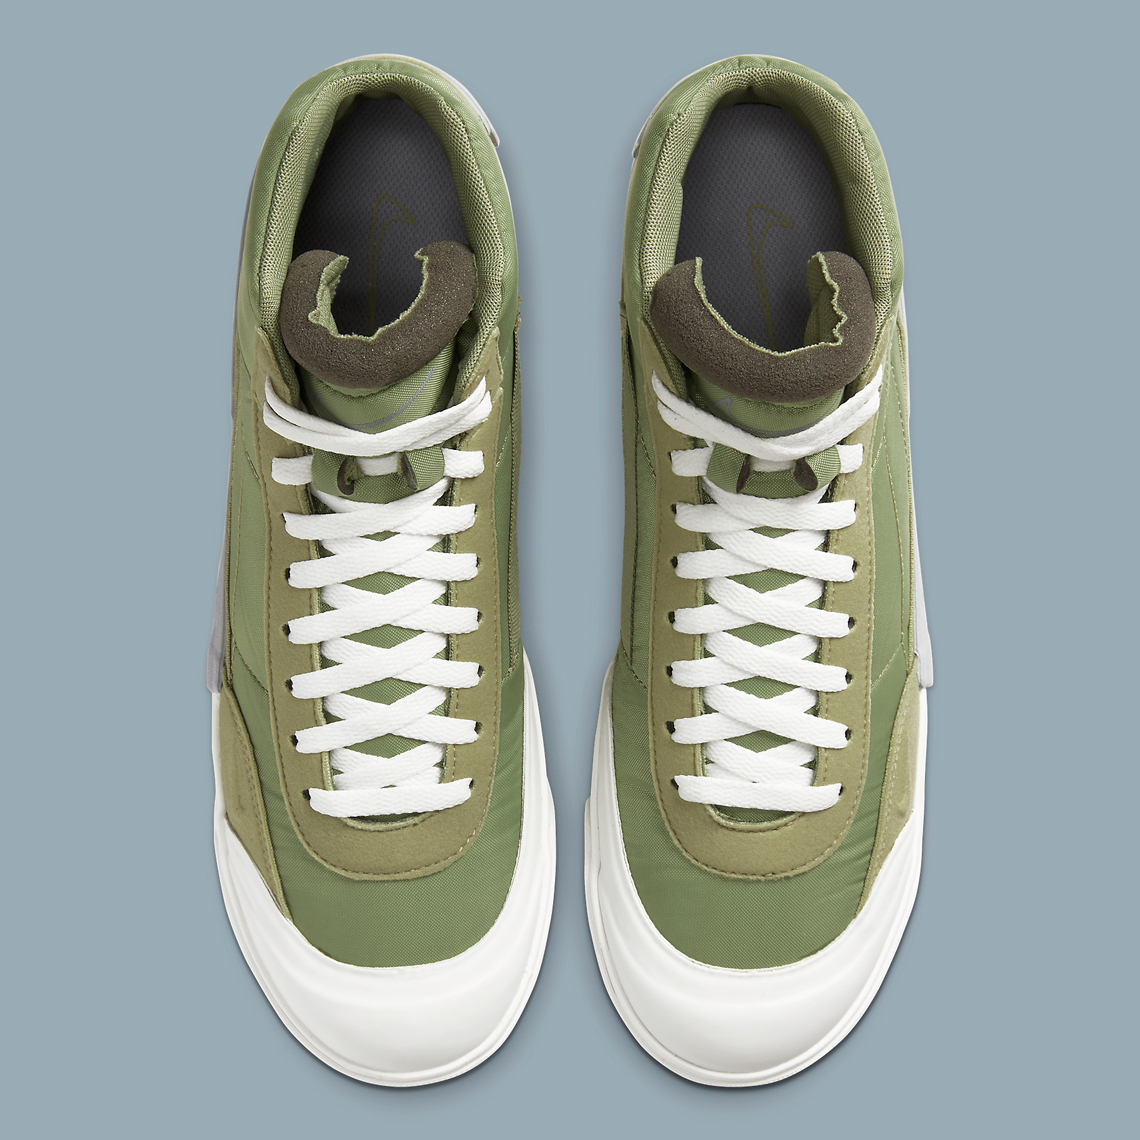 Nike Drop-Type Mid Olive BQ5190-300 | SneakerNews.com